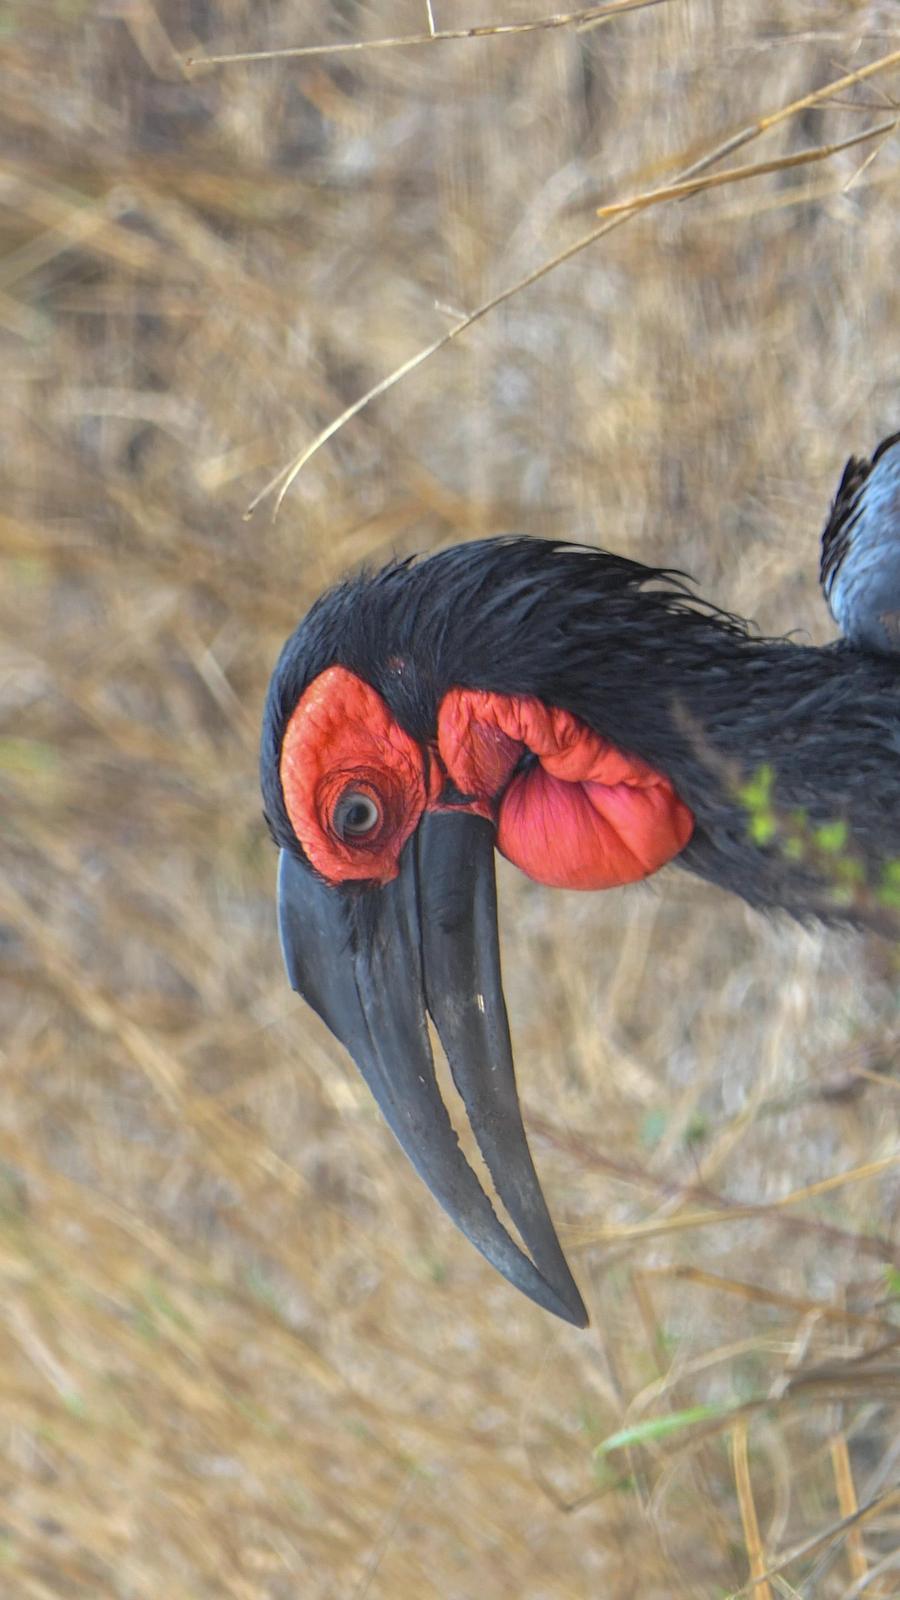 Southern Ground-Hornbill Photo by Randy Siebert